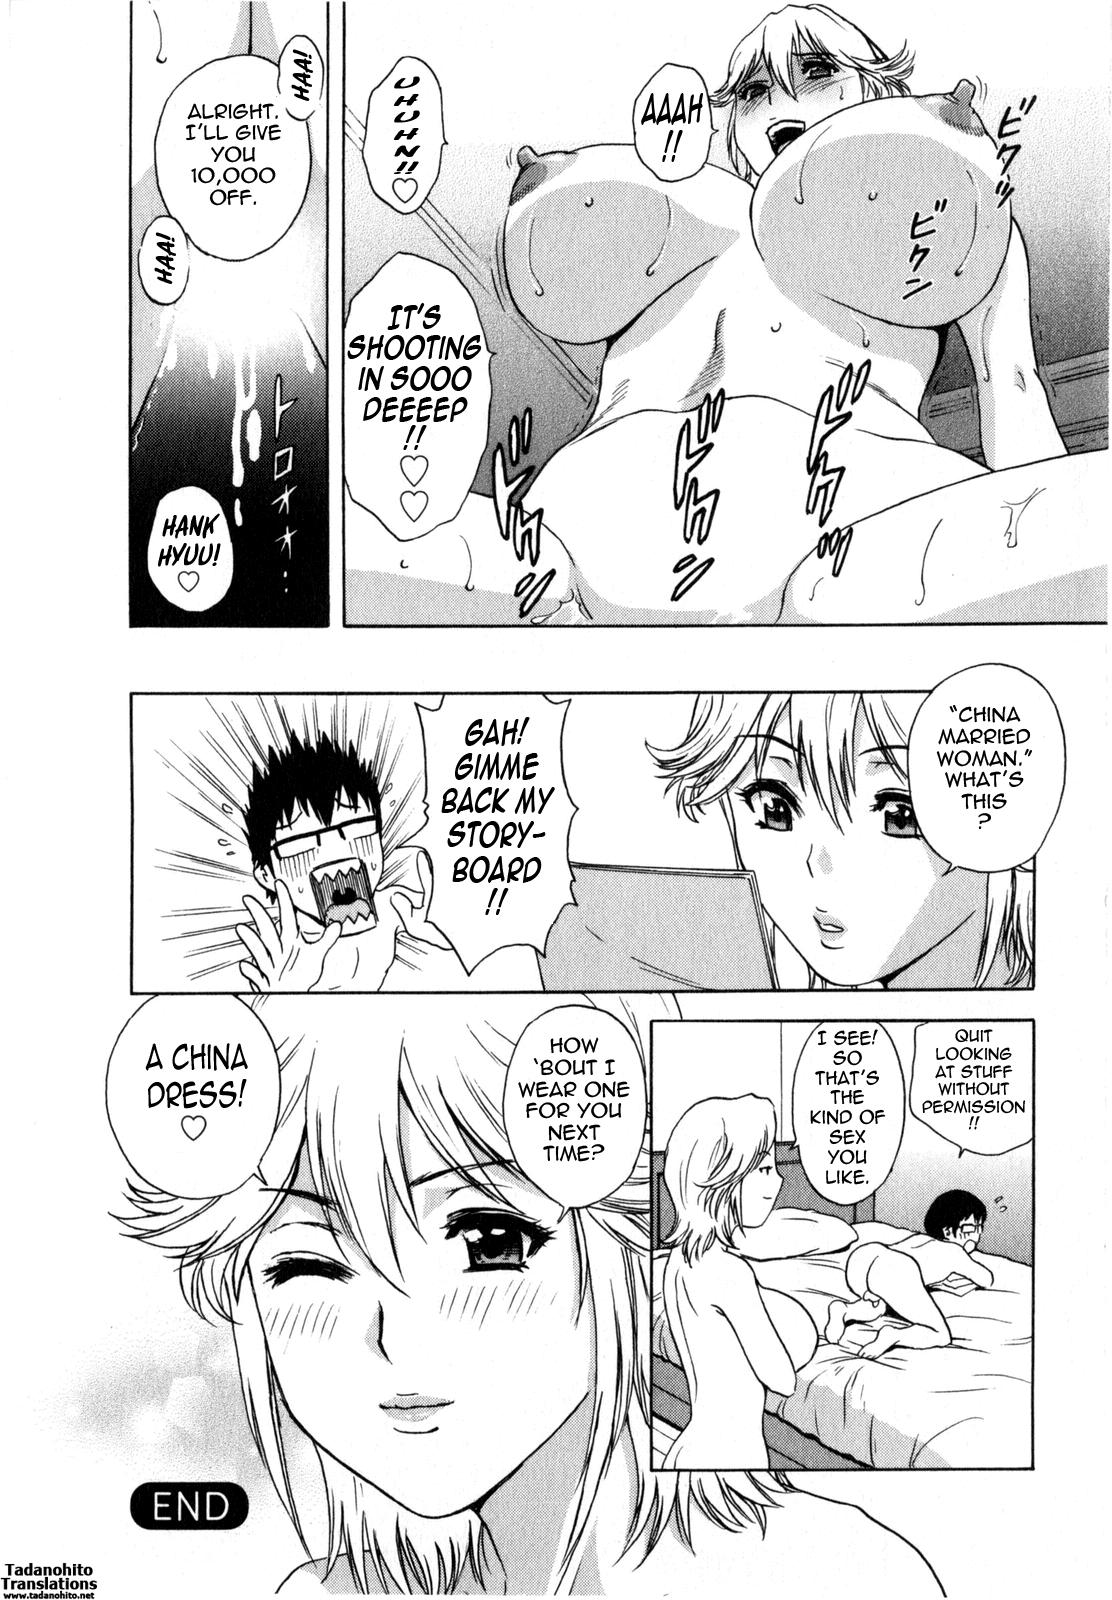 [Hidemaru] Life with Married Women Just Like a Manga 2 - Ch. 1-5 [English] {Tadanohito} 63